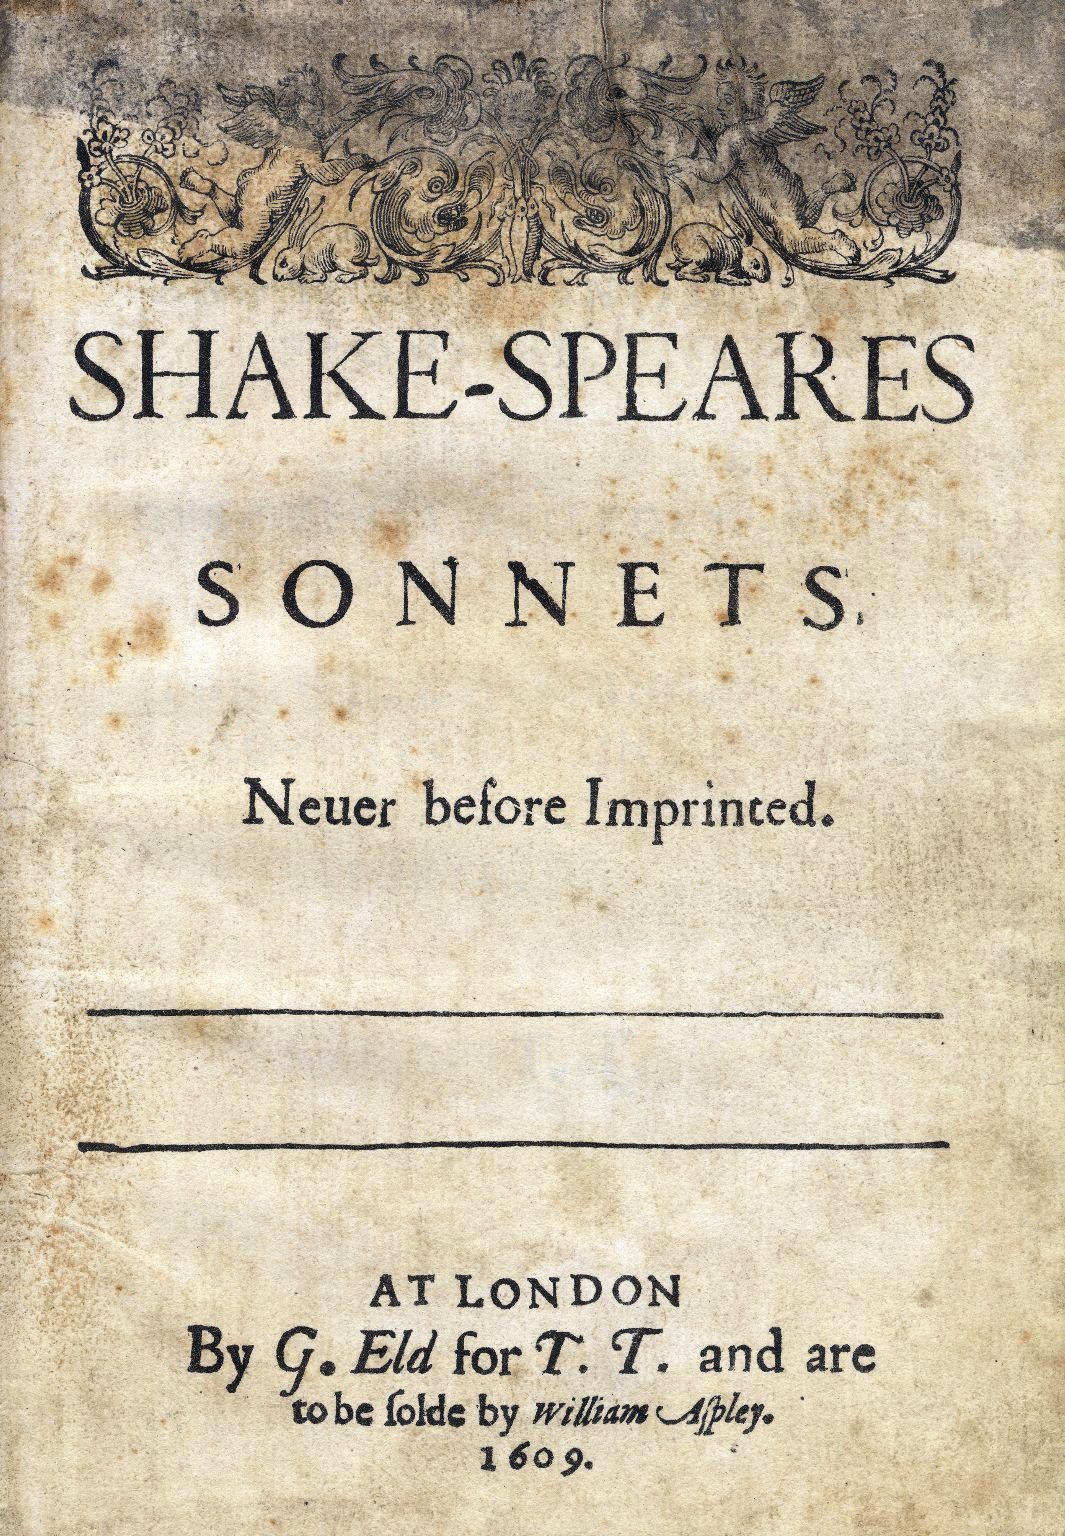 iambic pentameter sonnet examples